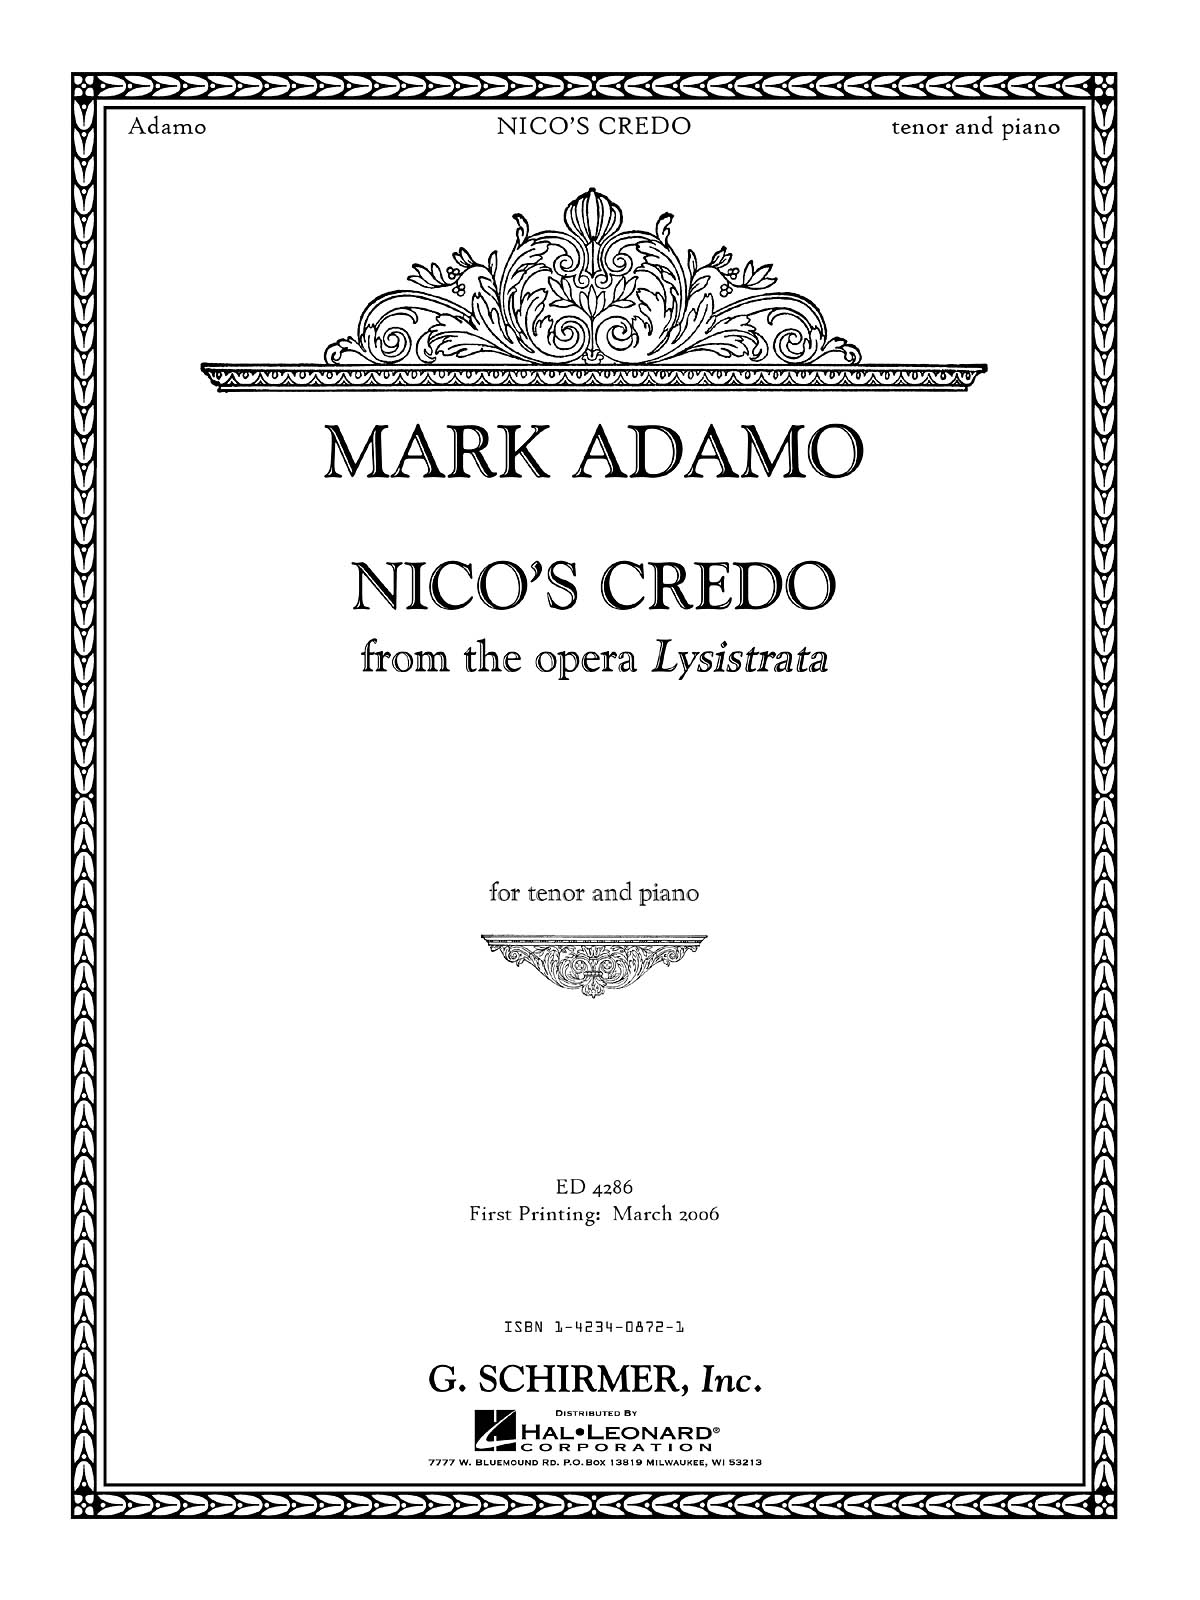 Mark Adamo: Nico's Credo (Lysistrata)